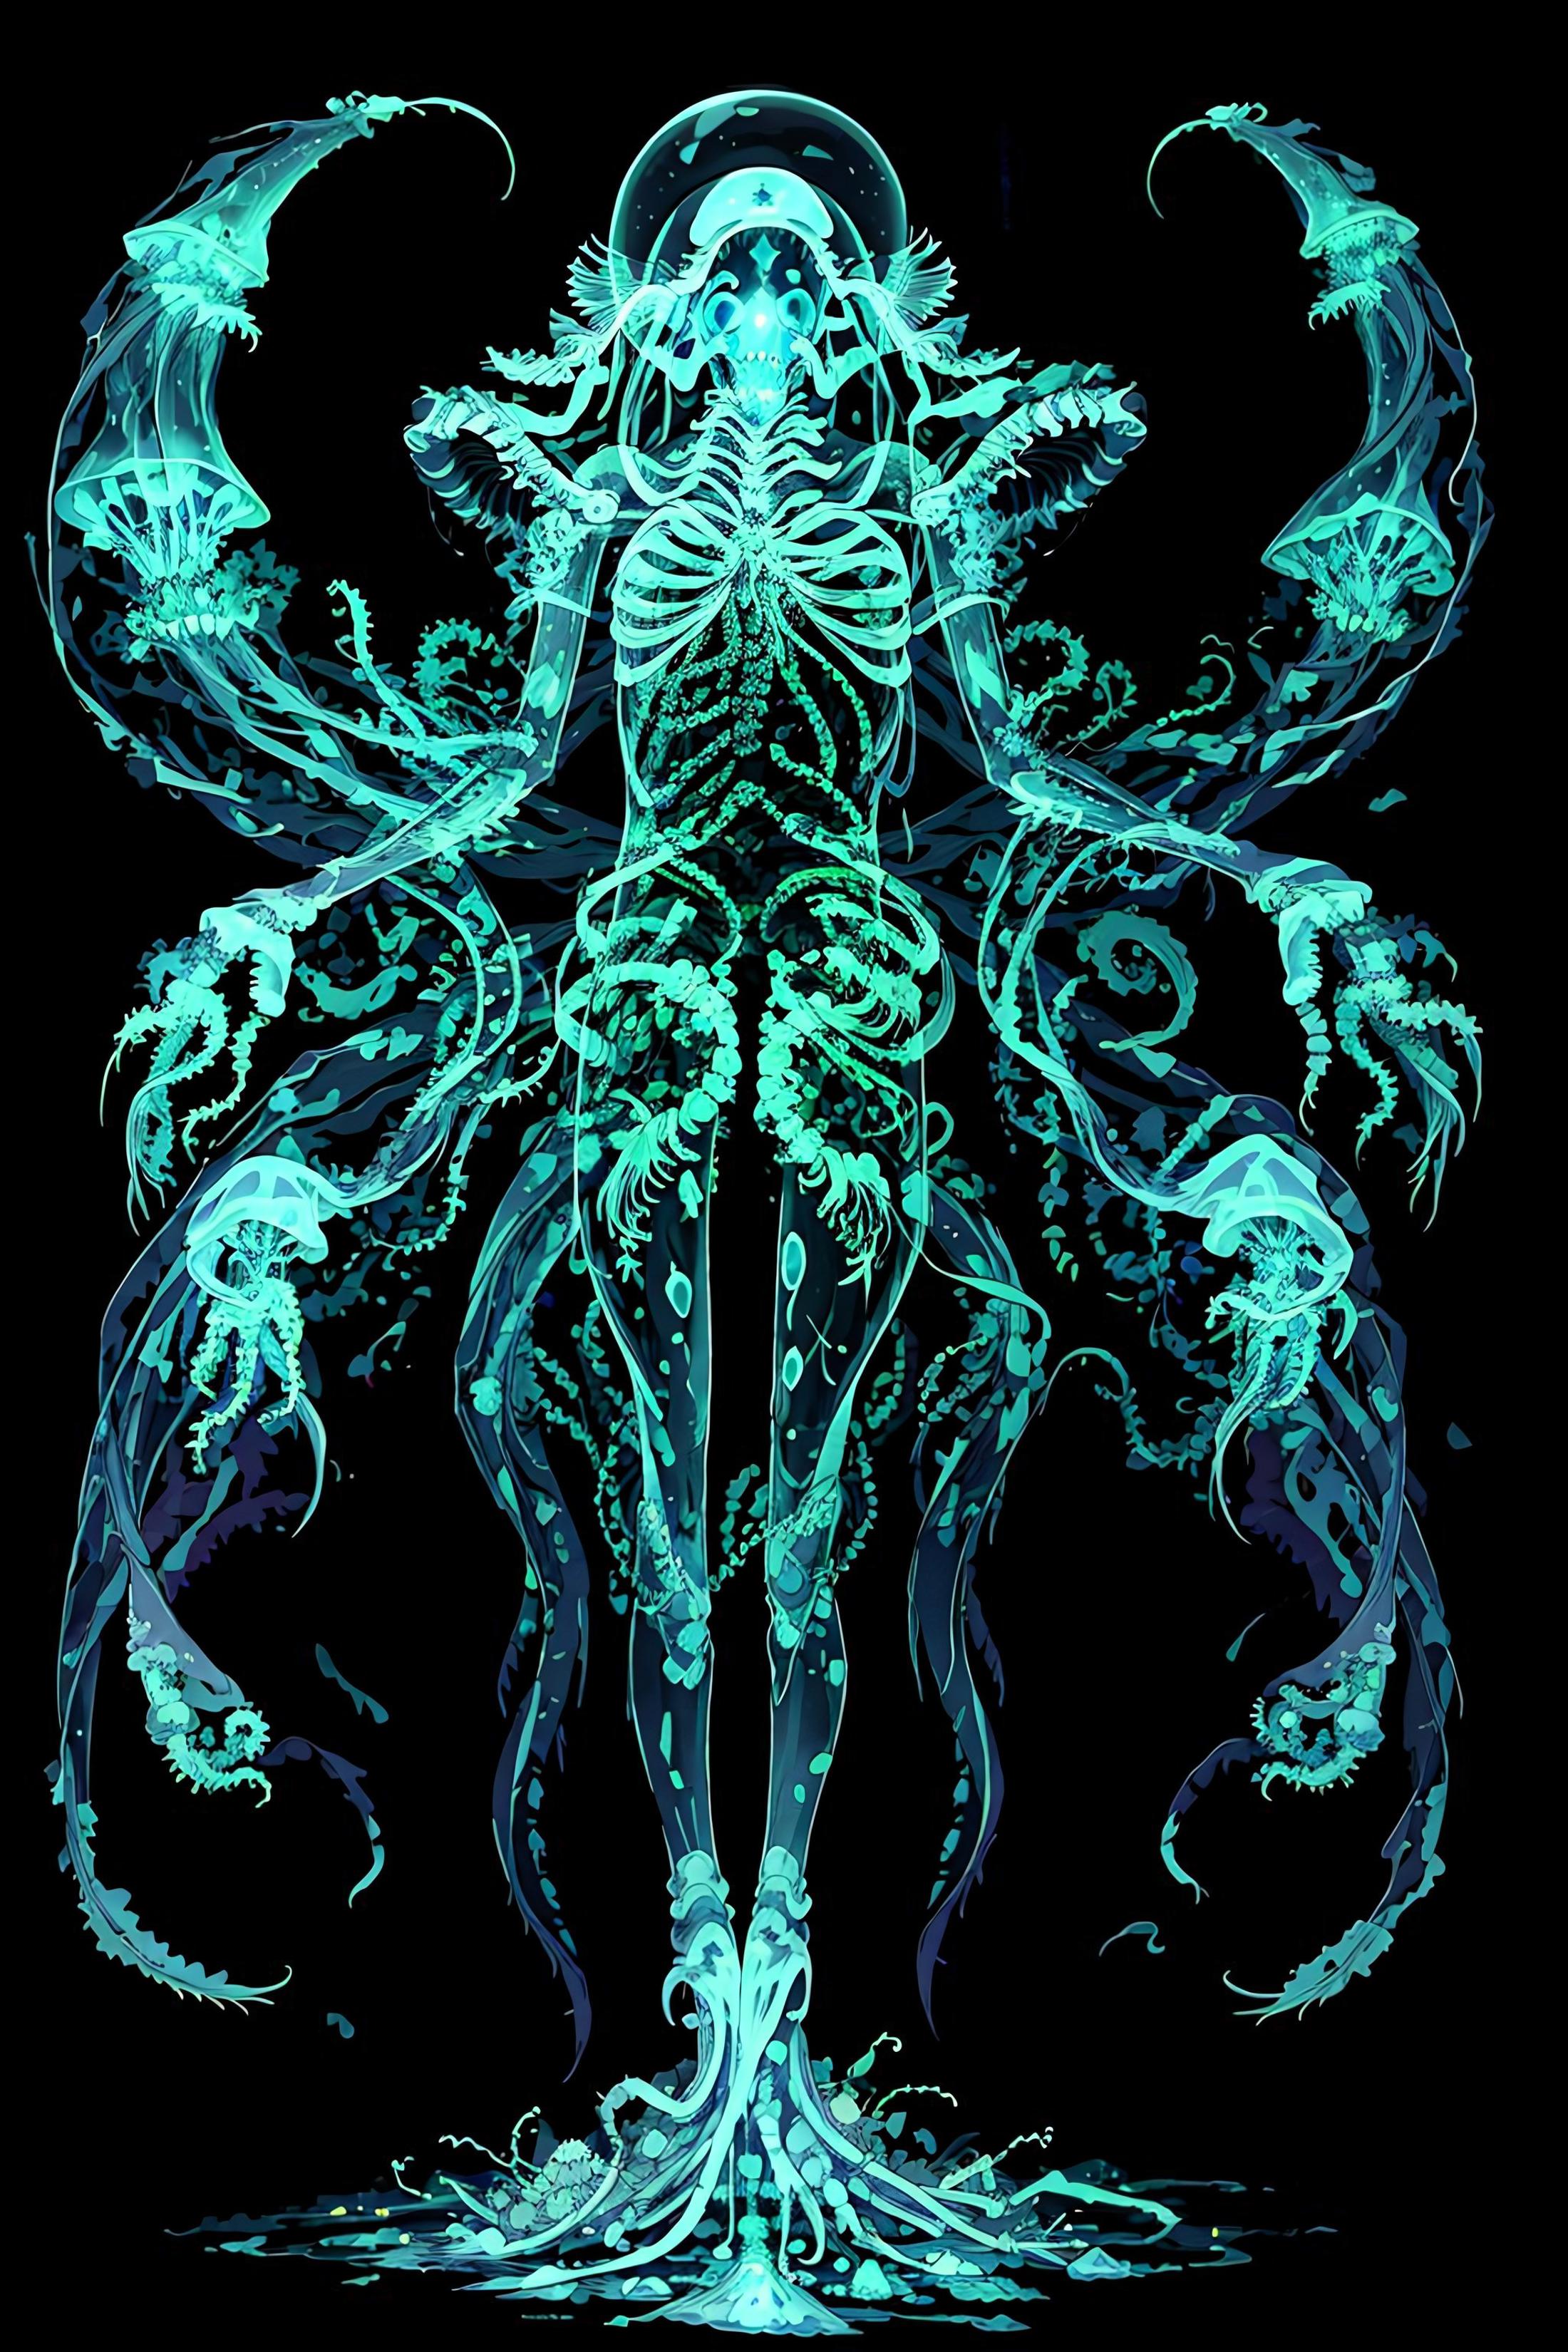 X-Ray Art image by ninjatacoshell